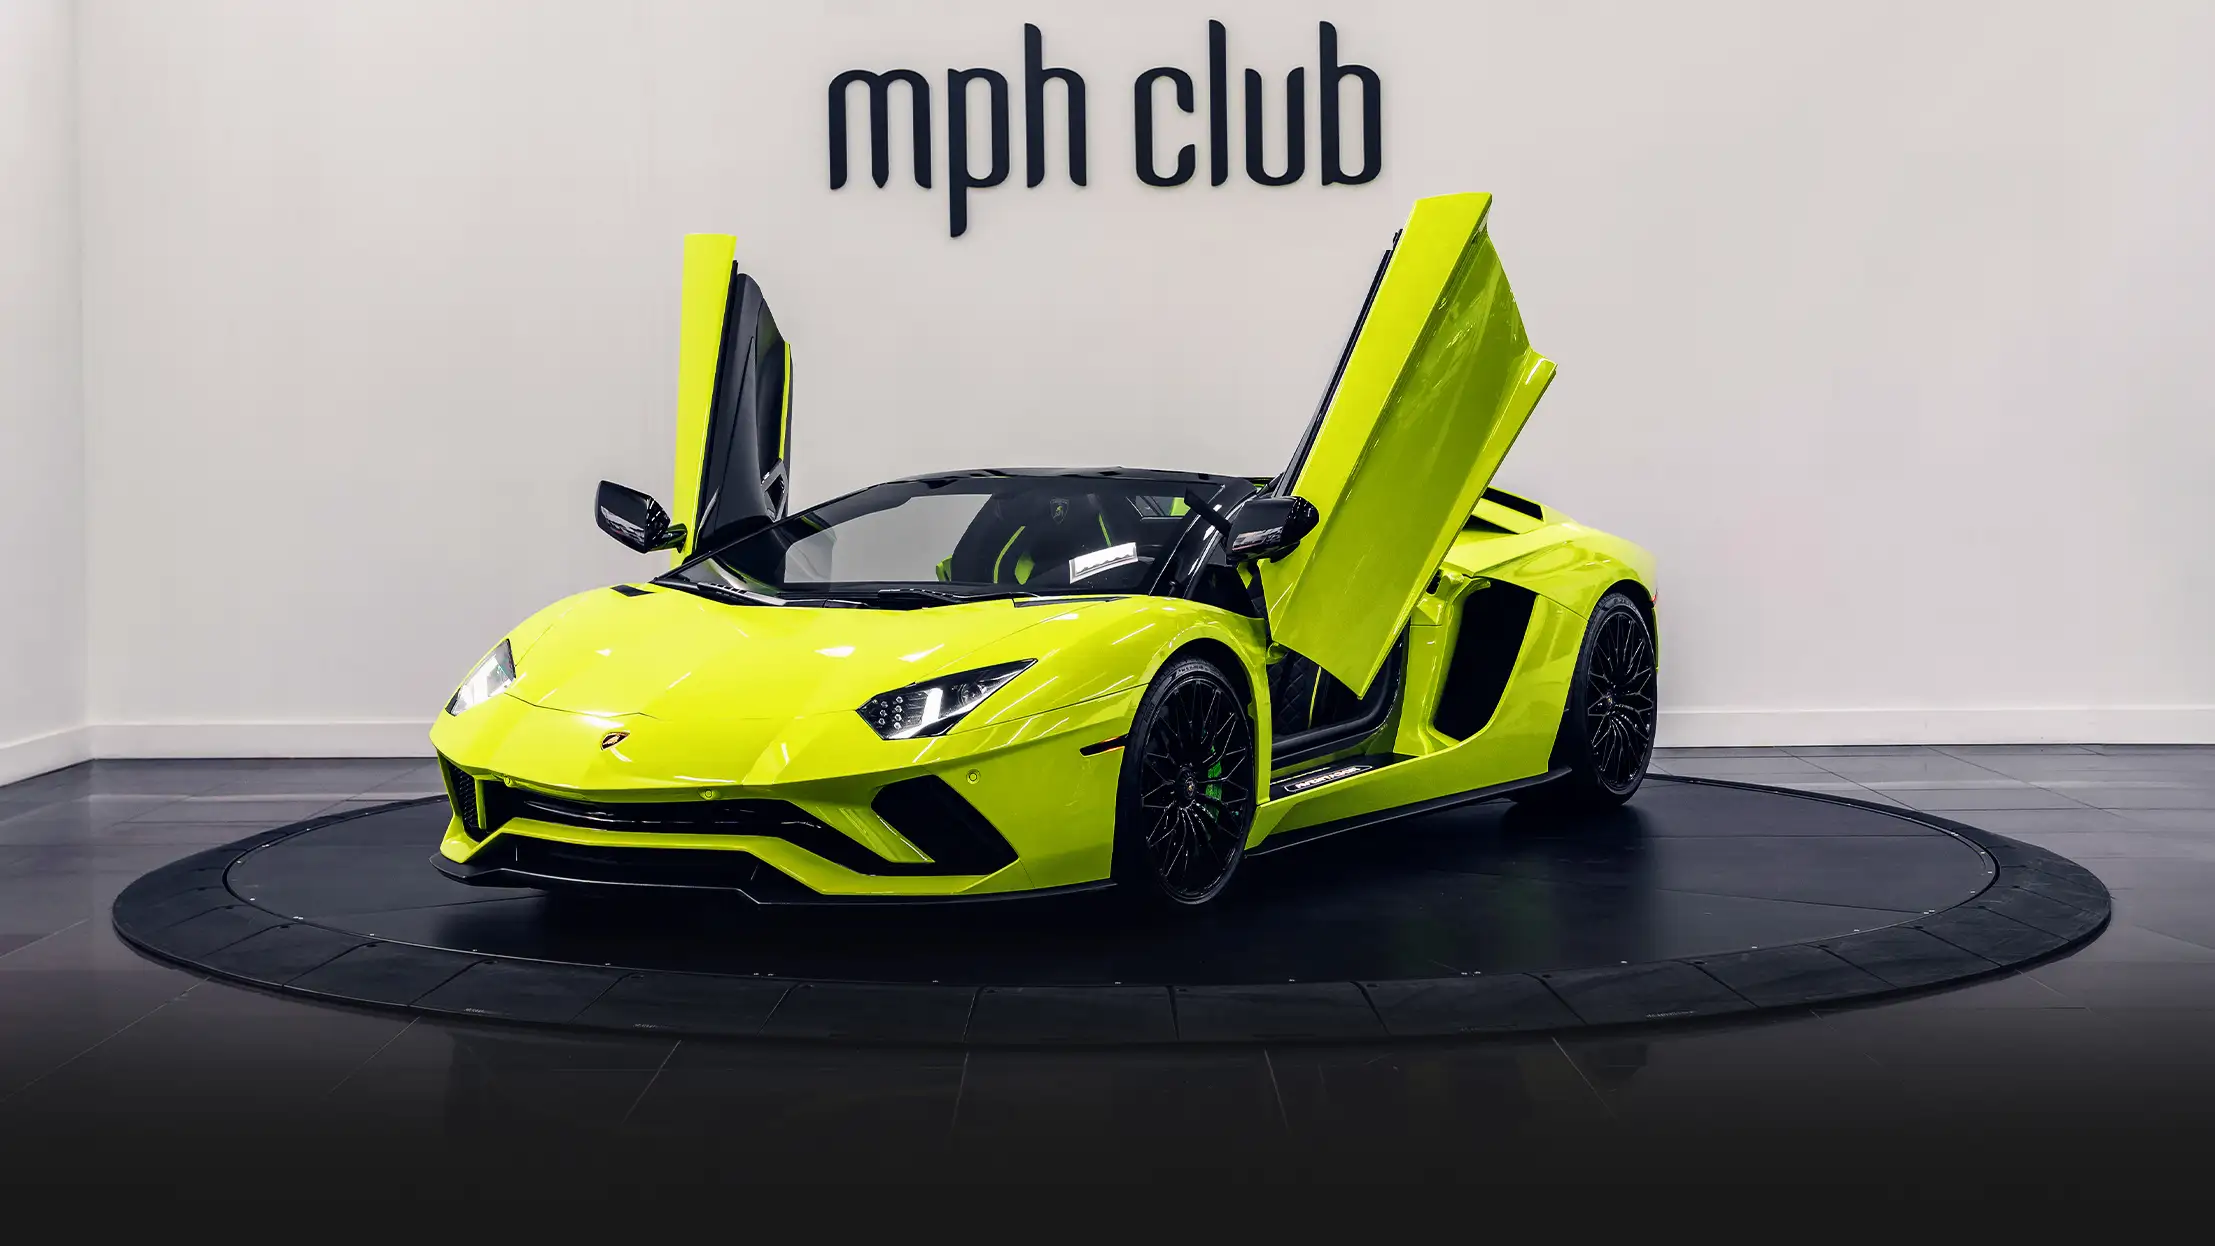 Yellow Lamborghini Aventador S Roadster rental profile view - mph club